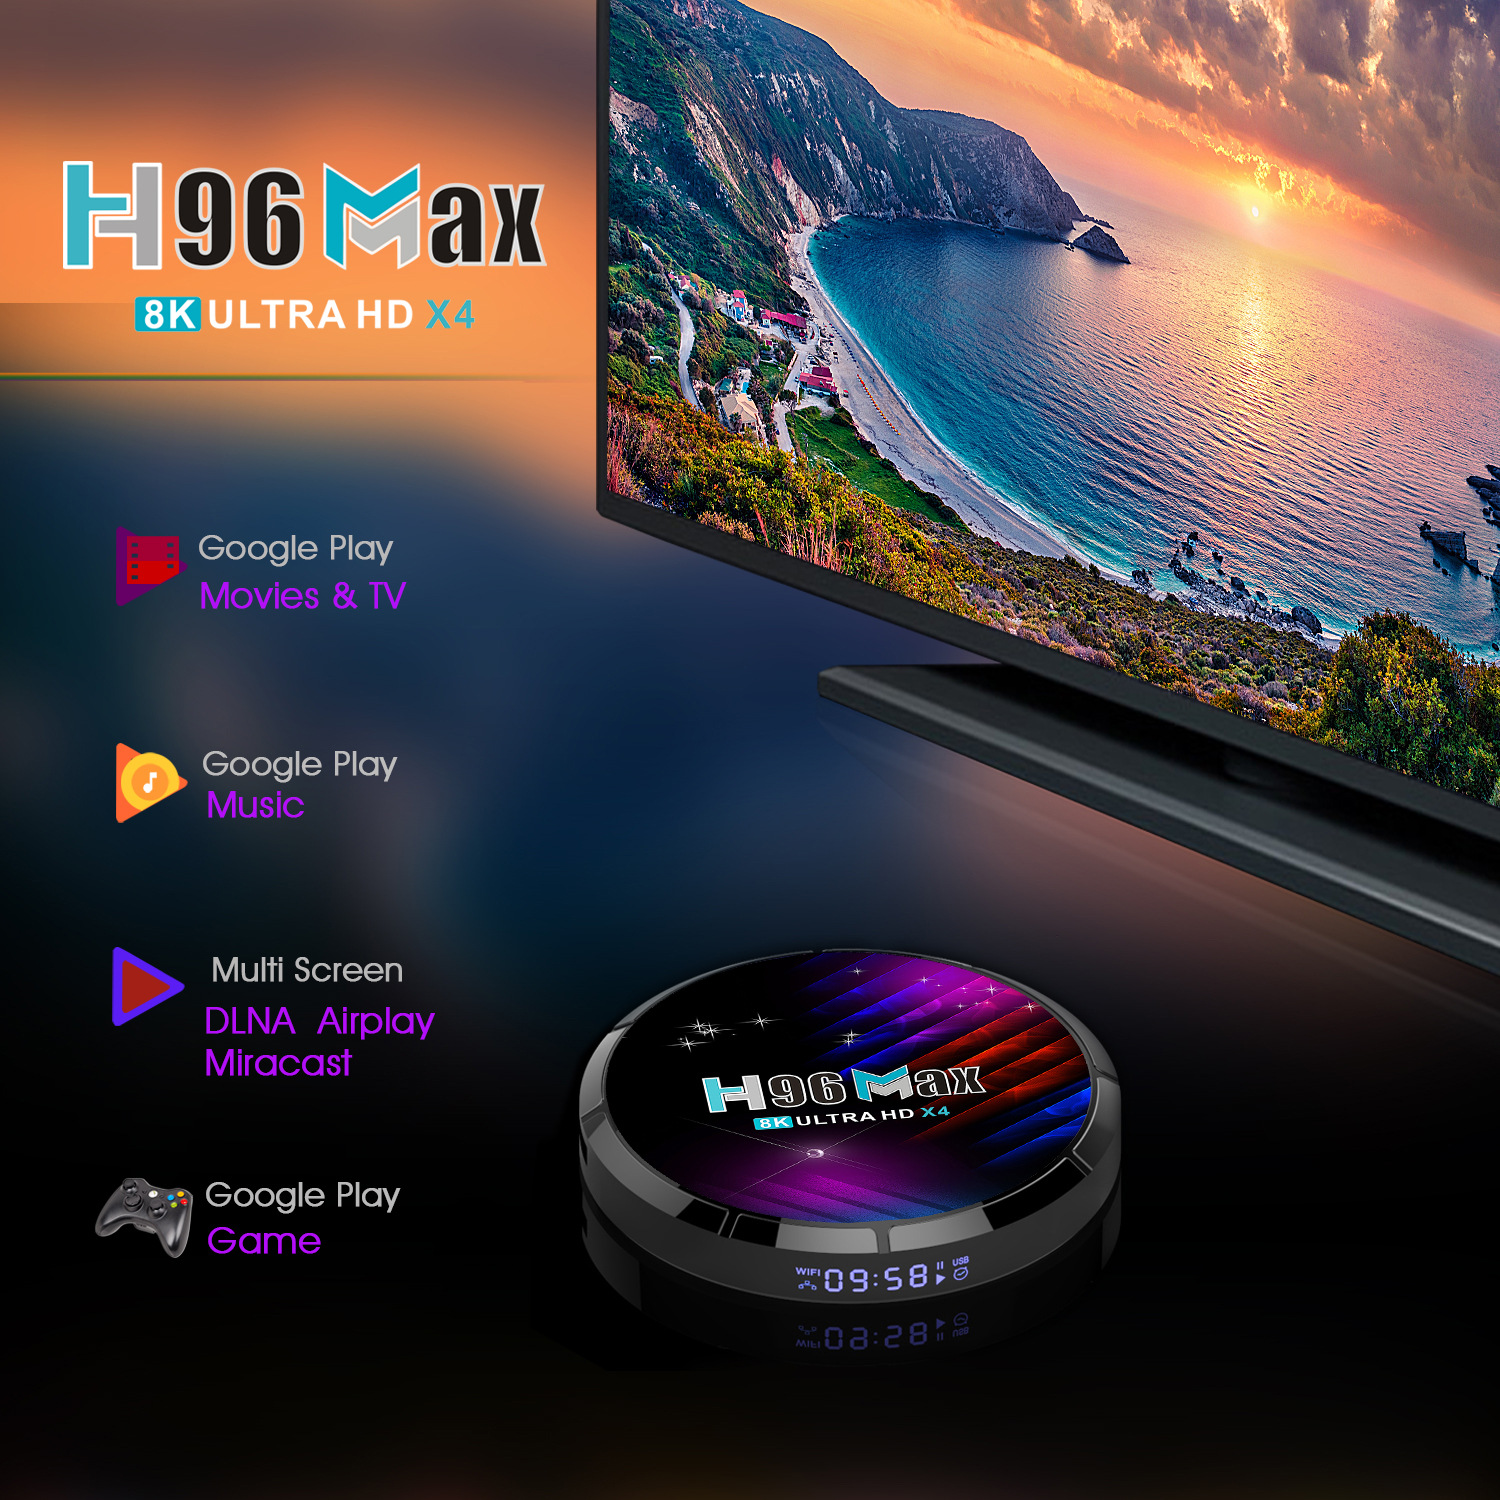 H96 Max X4 S905X4 Android 11.0 TV 4+64G TV Box 5G WIFI Bluetooth 4K Media Player Set Top Box Google Player Youtube 8K